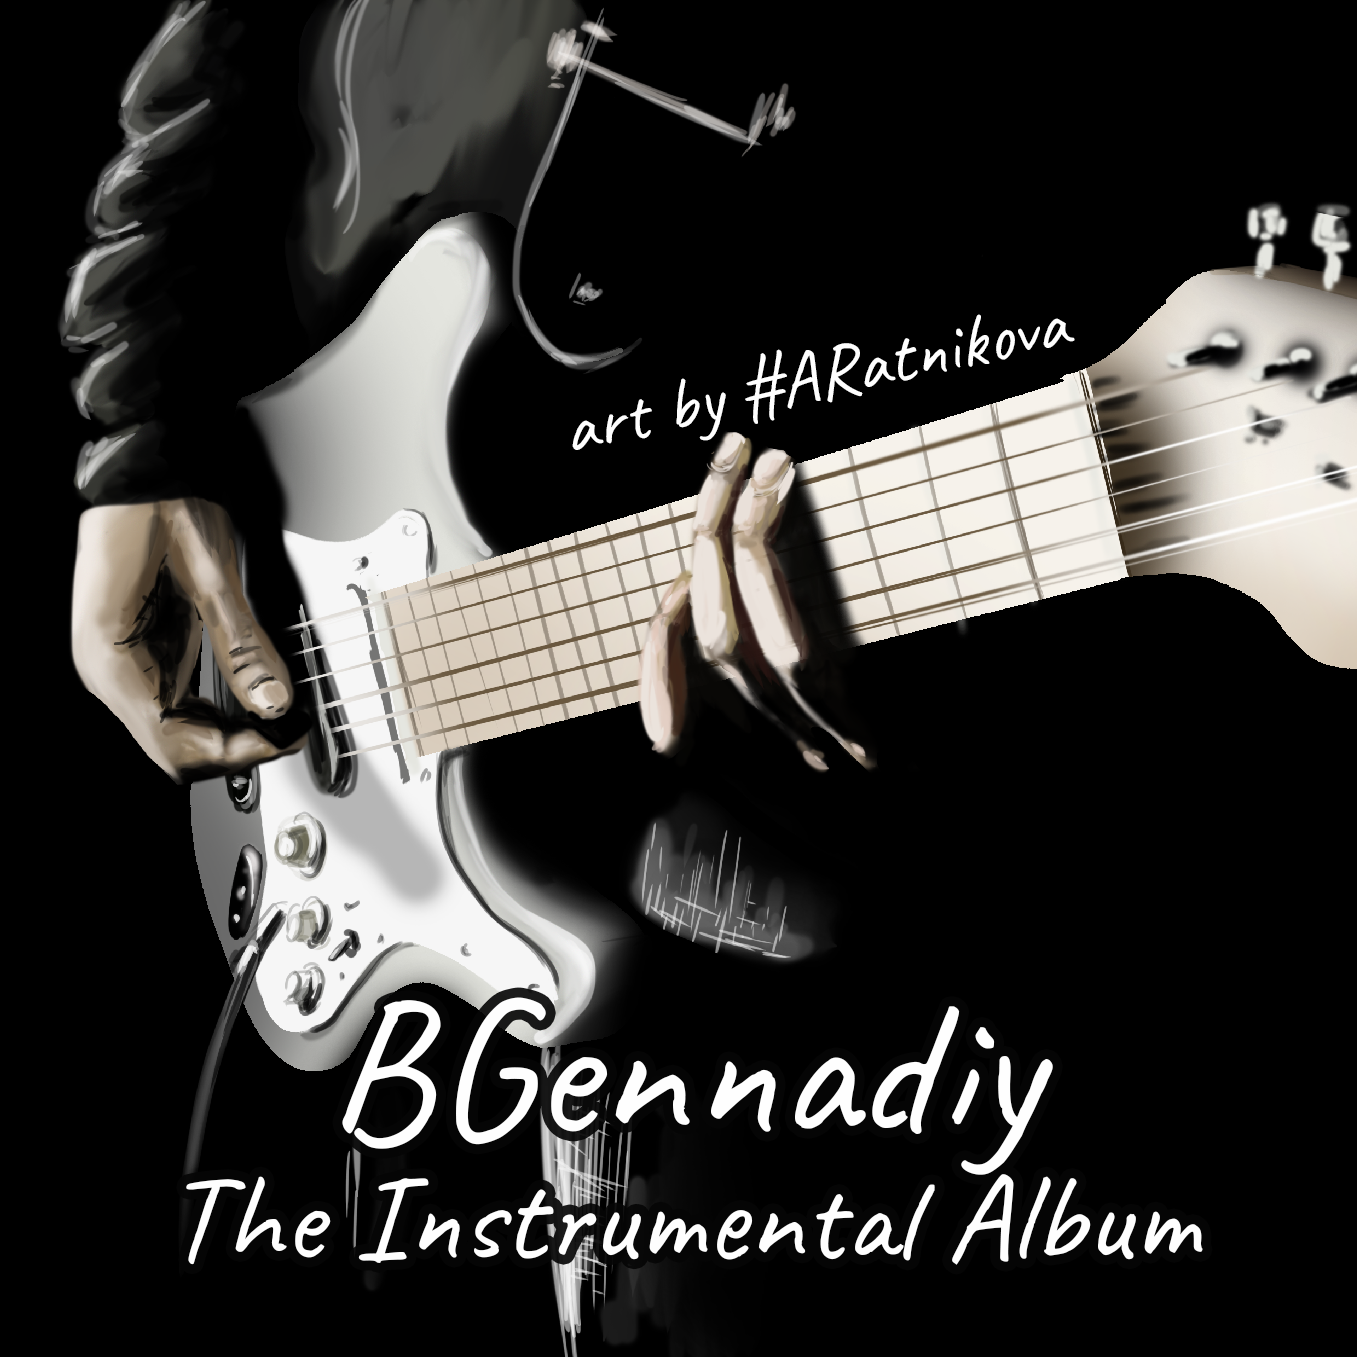 BGennadiy - Инструментальный альбом (The Instrumental Album)